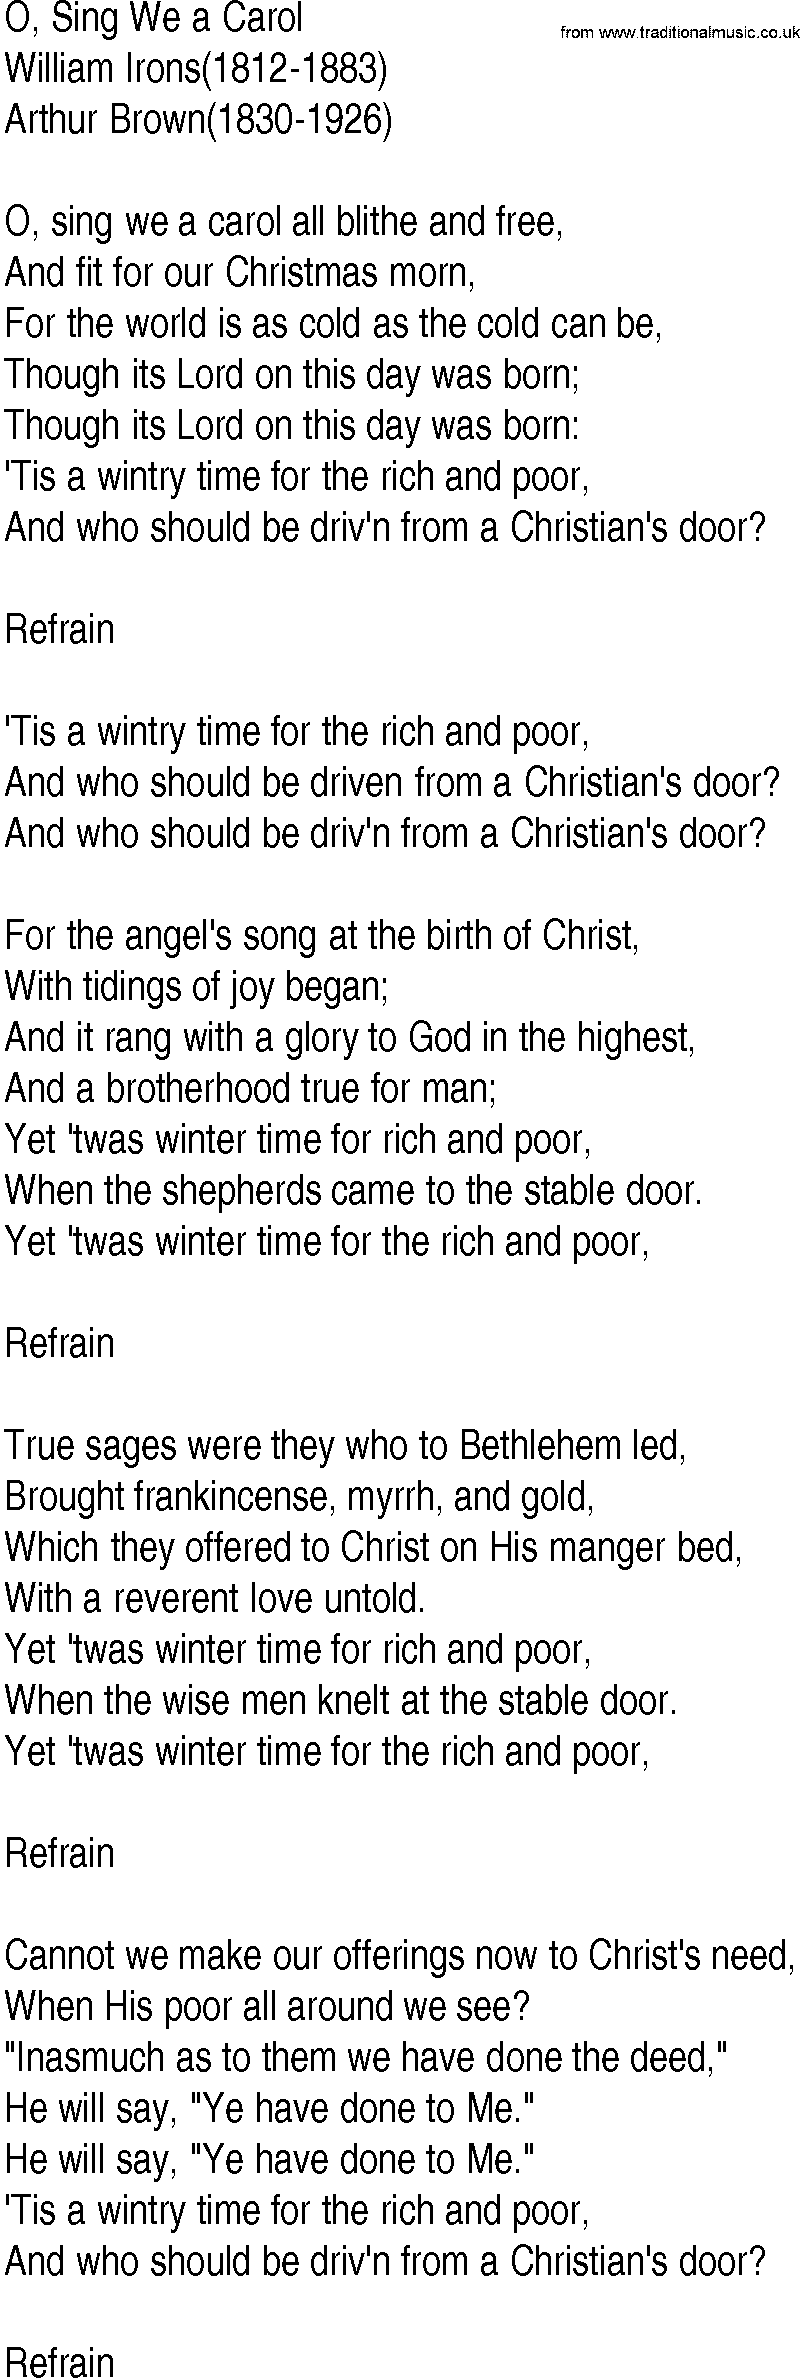 Hymn and Gospel Song: O, Sing We a Carol by William Irons lyrics